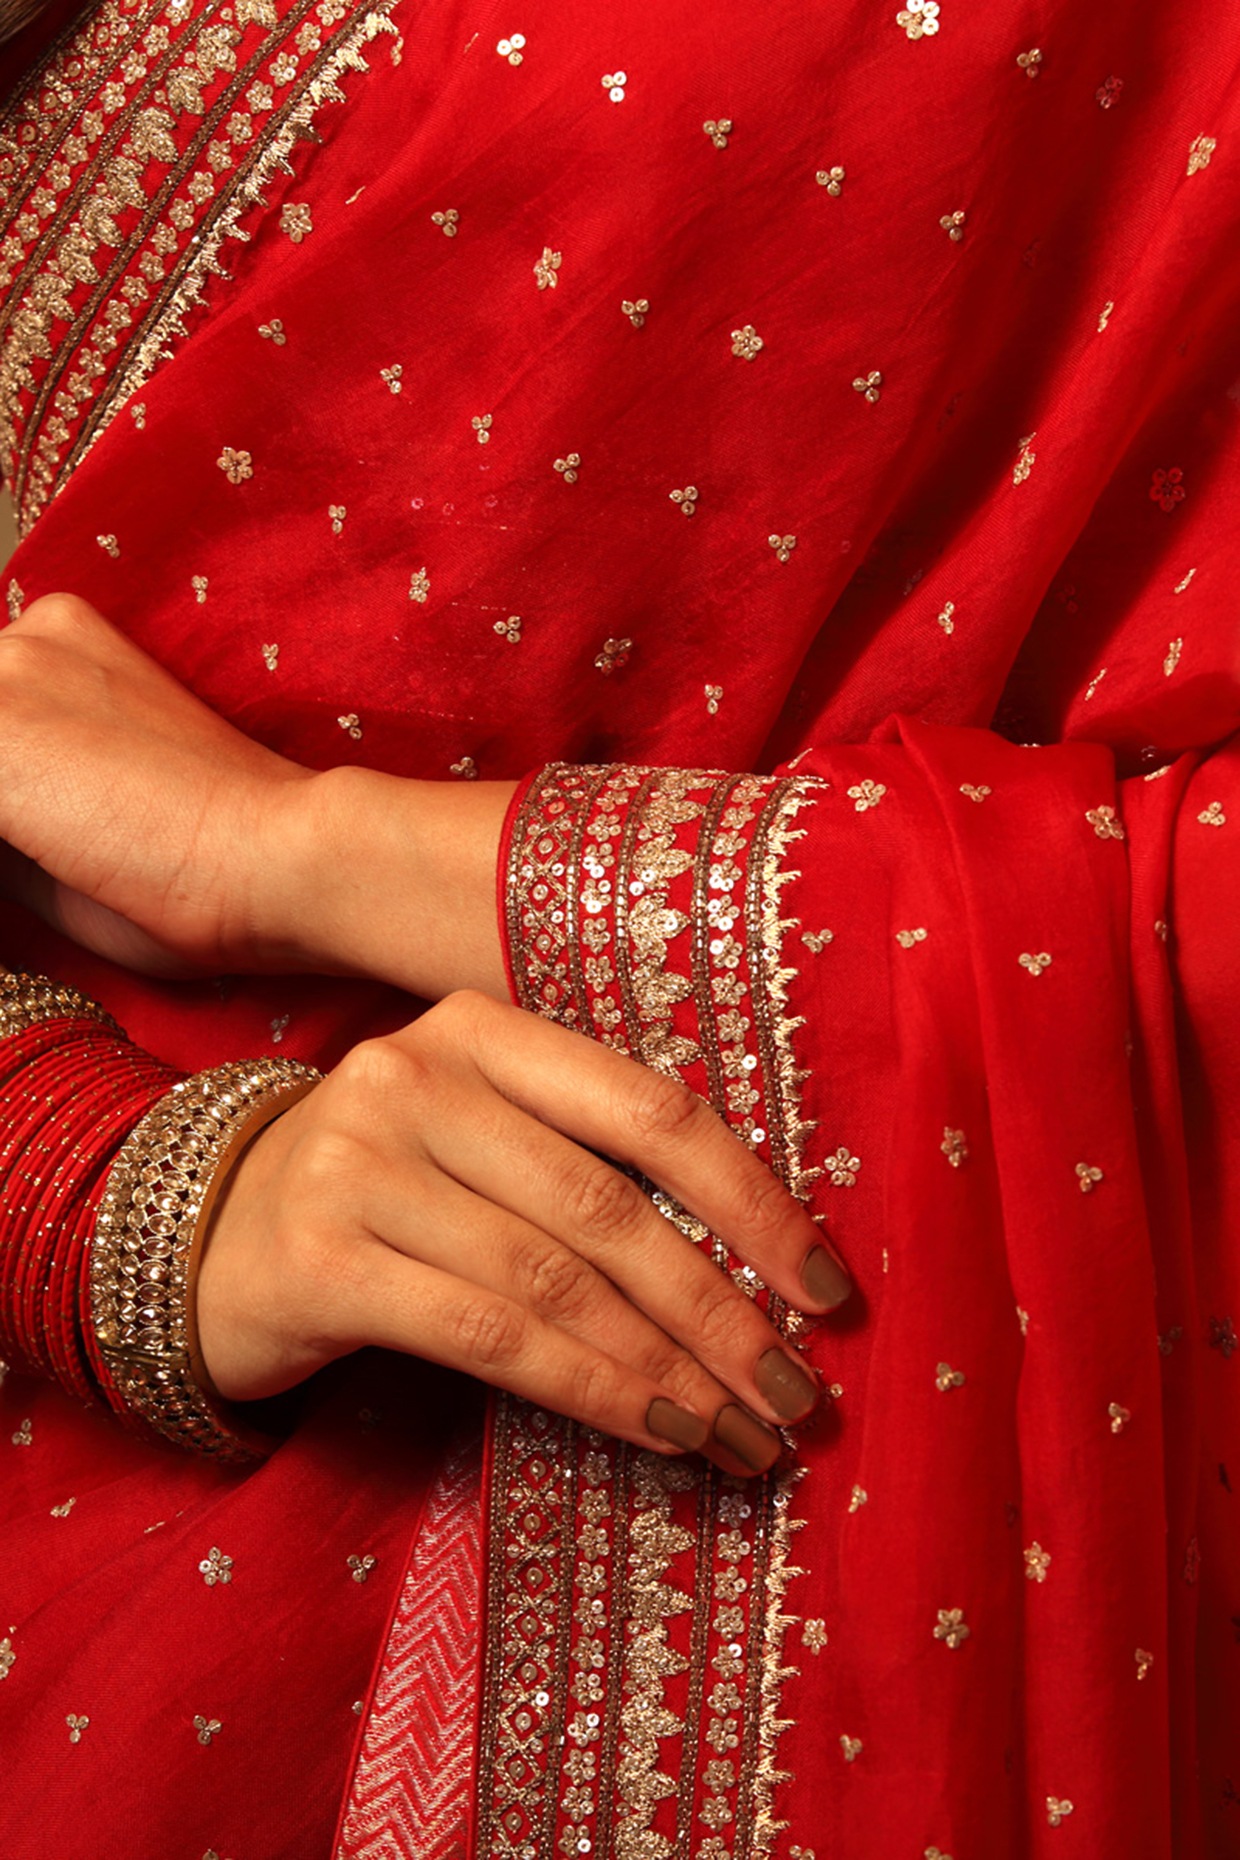 wearing a deep red color silk Saree